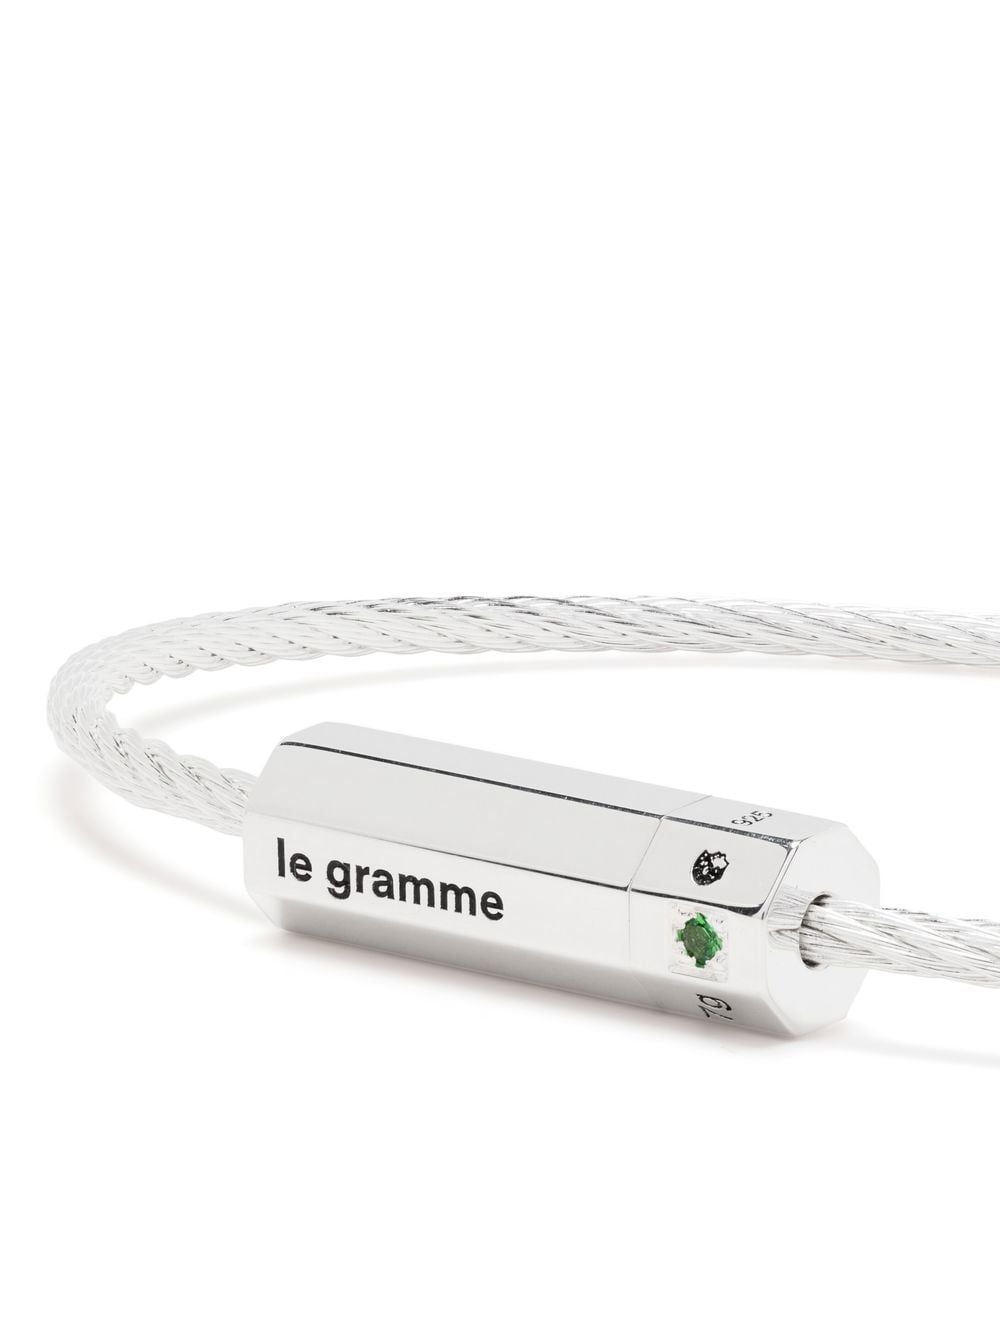 Farfetch Le Cable Tsavorite Gramme 7g - Bracelet